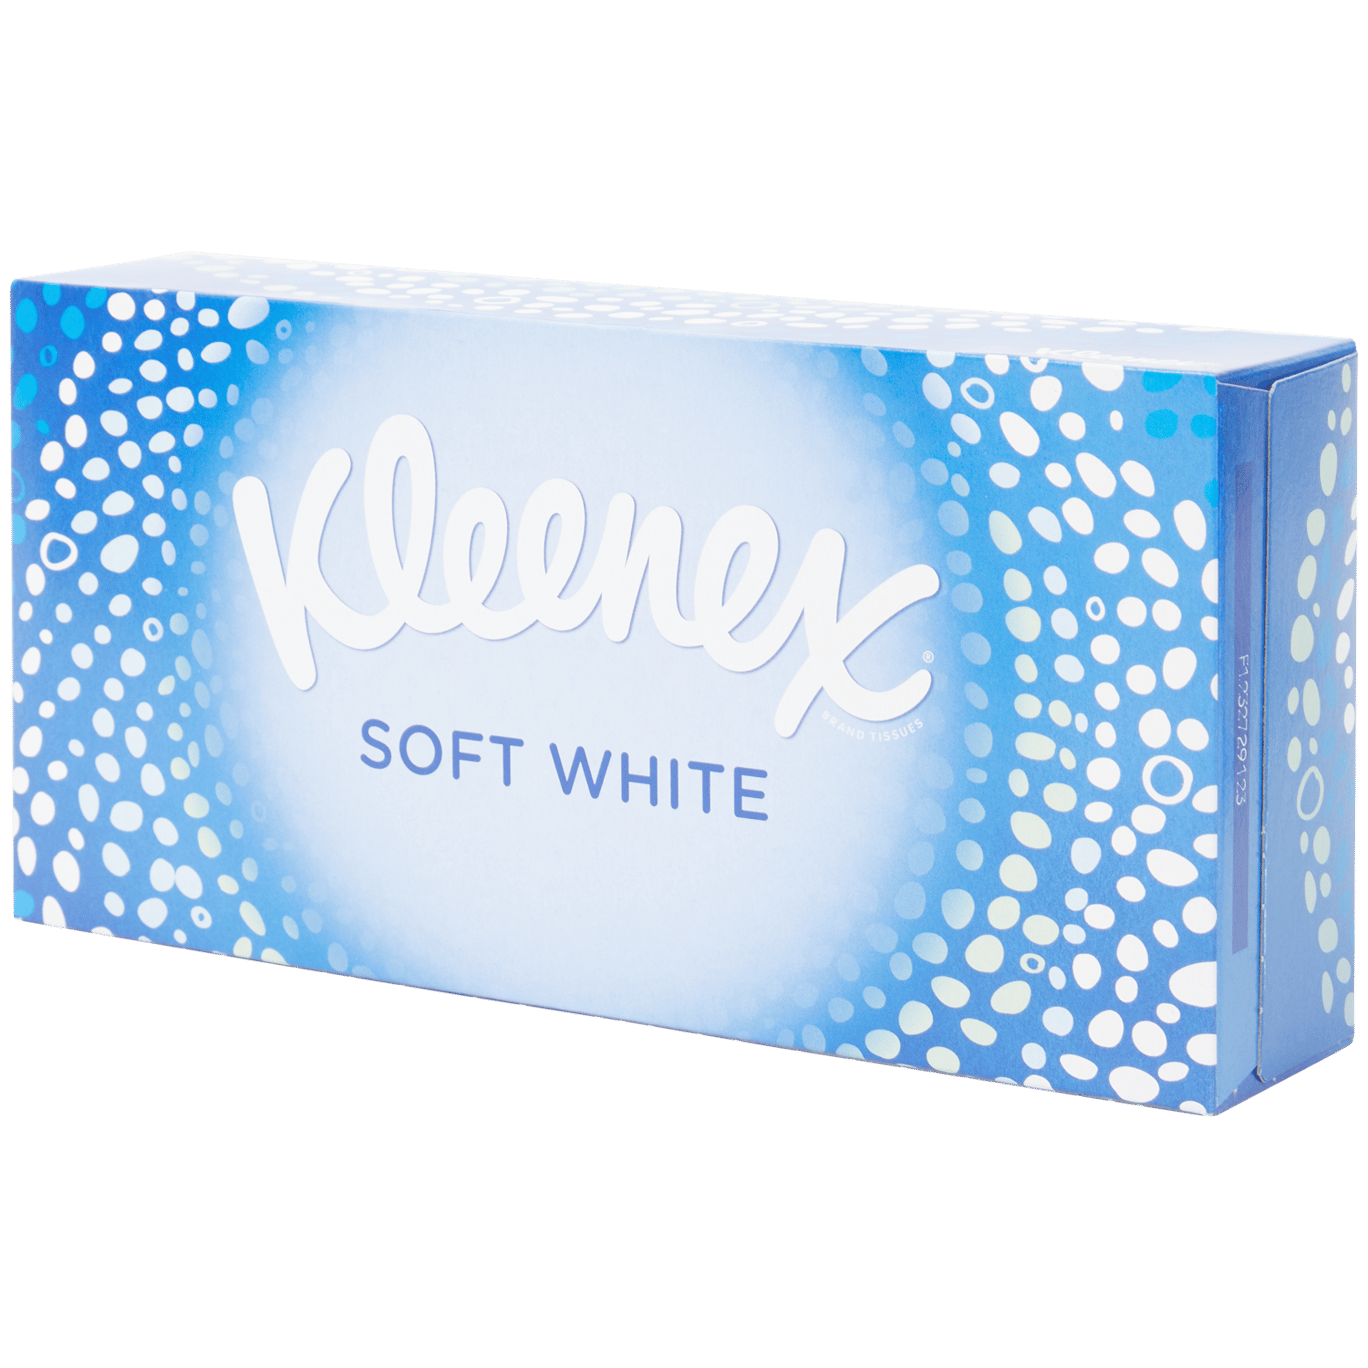 Chusteczki higieniczne Soft White Kleenex